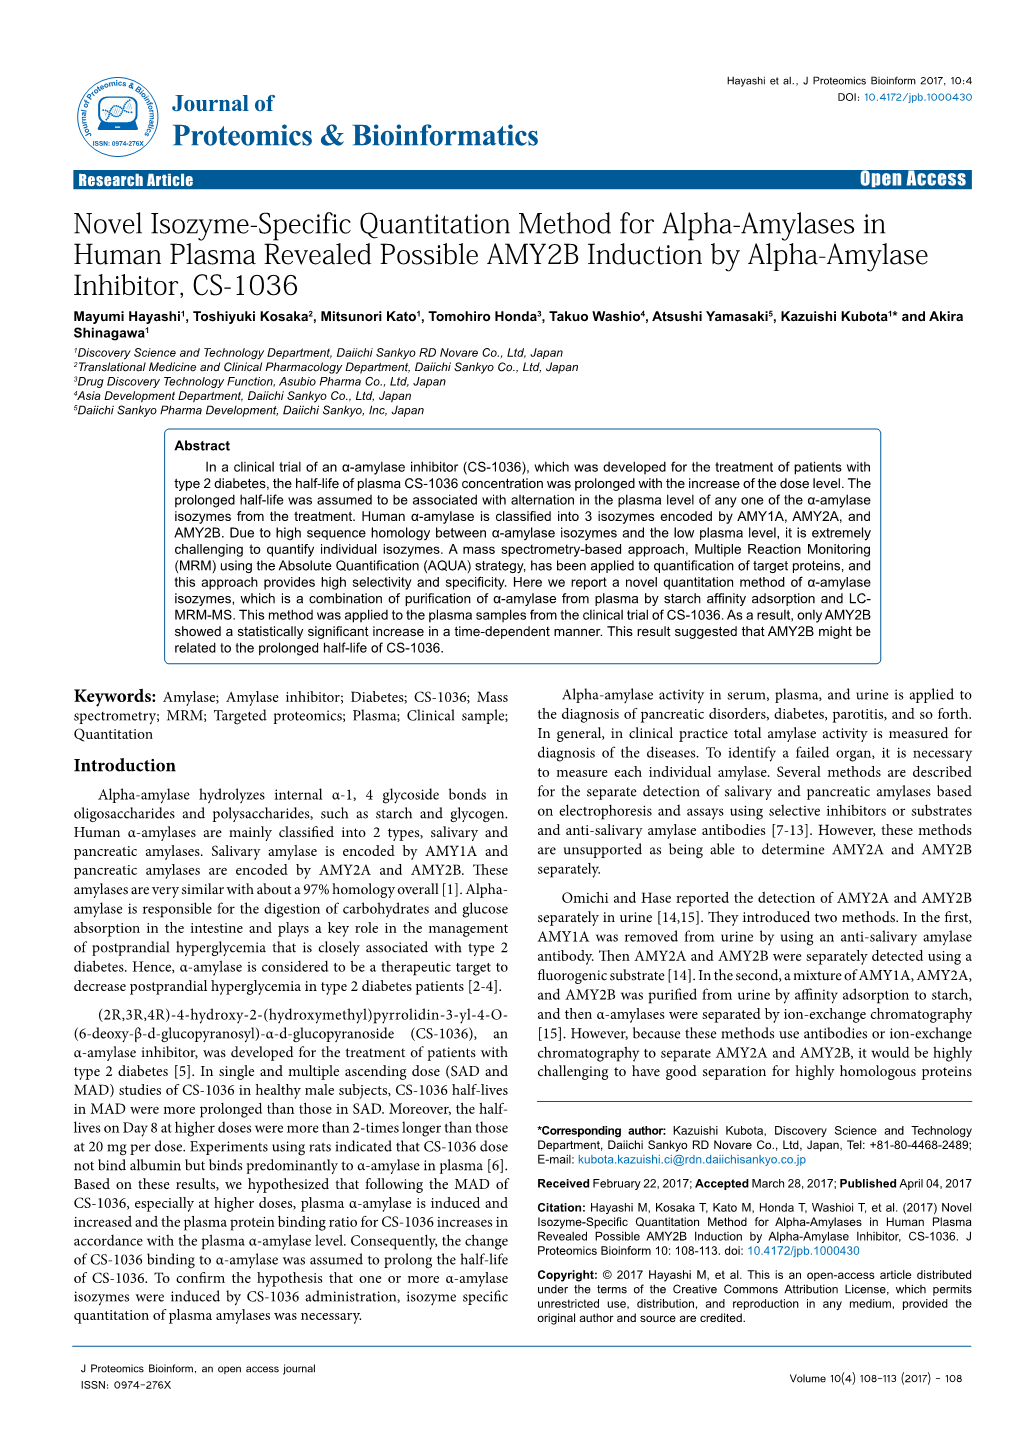 Novel Isozyme-Specific Quantitation Method for Alpha-Amylases In